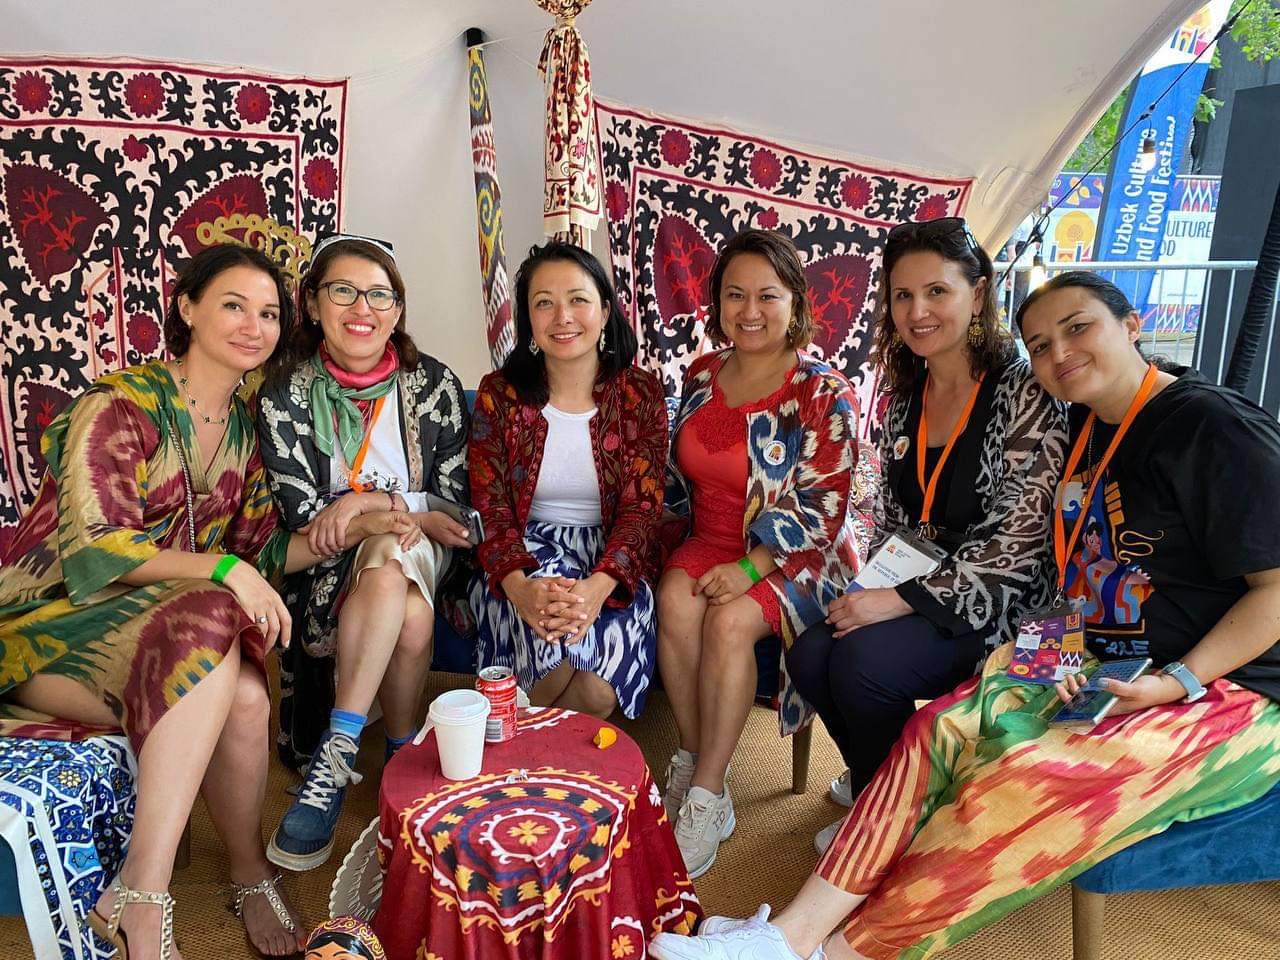 Uzbek Culture and food festival: Узбекистан в Лондоне: впечатления, комментарии | London Cult.